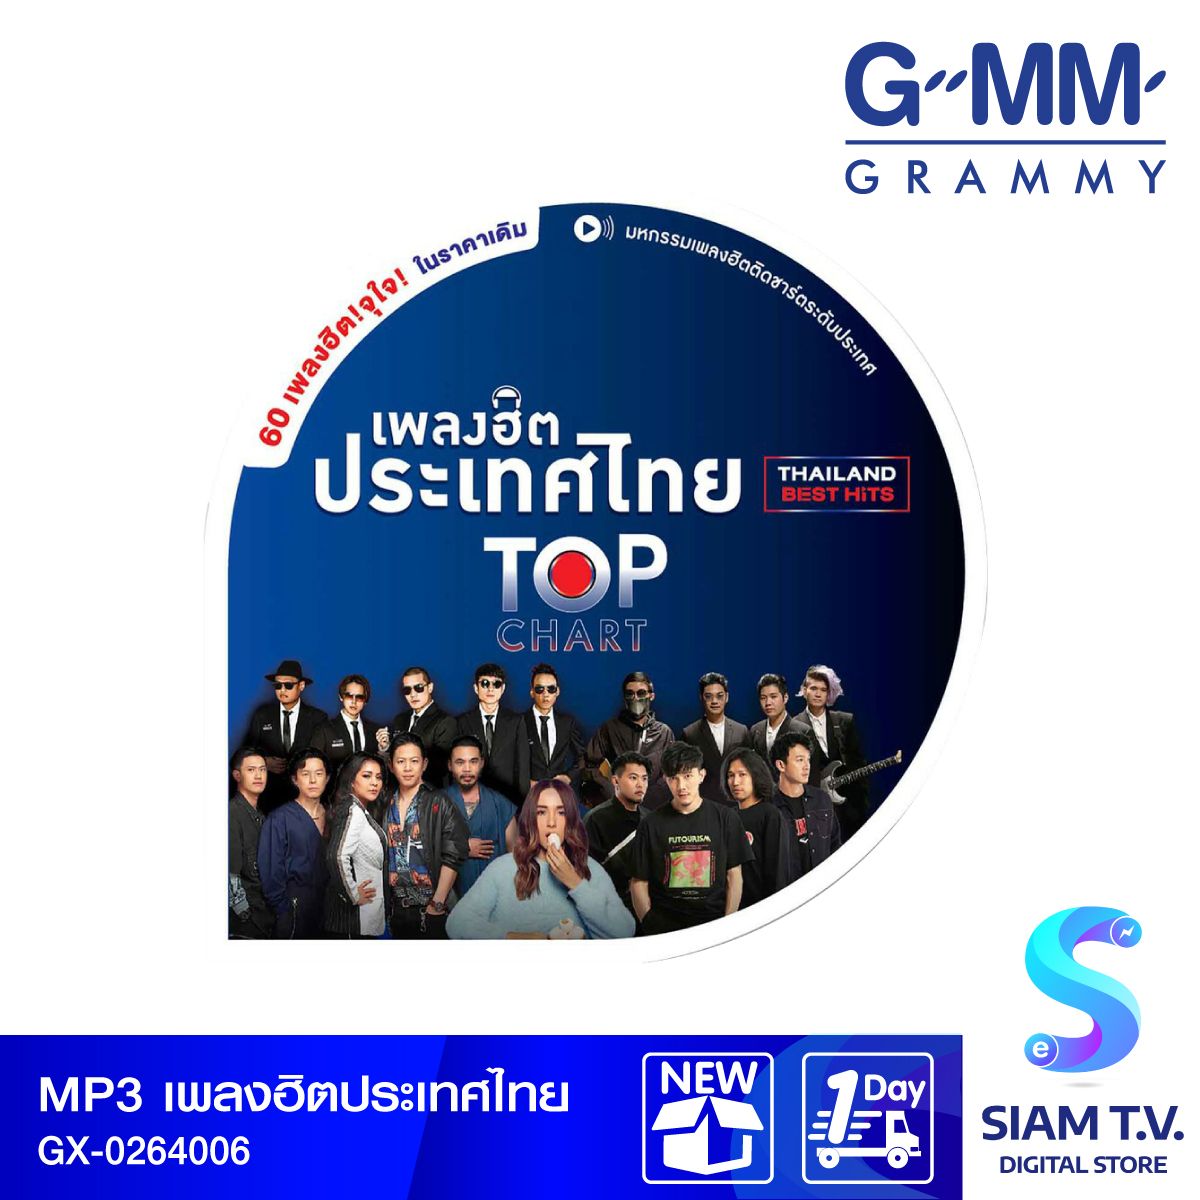 GMM GRAMMY MP3 เพลงฮิตประเทศไทย Thailand Best Hits Top Chat Branded